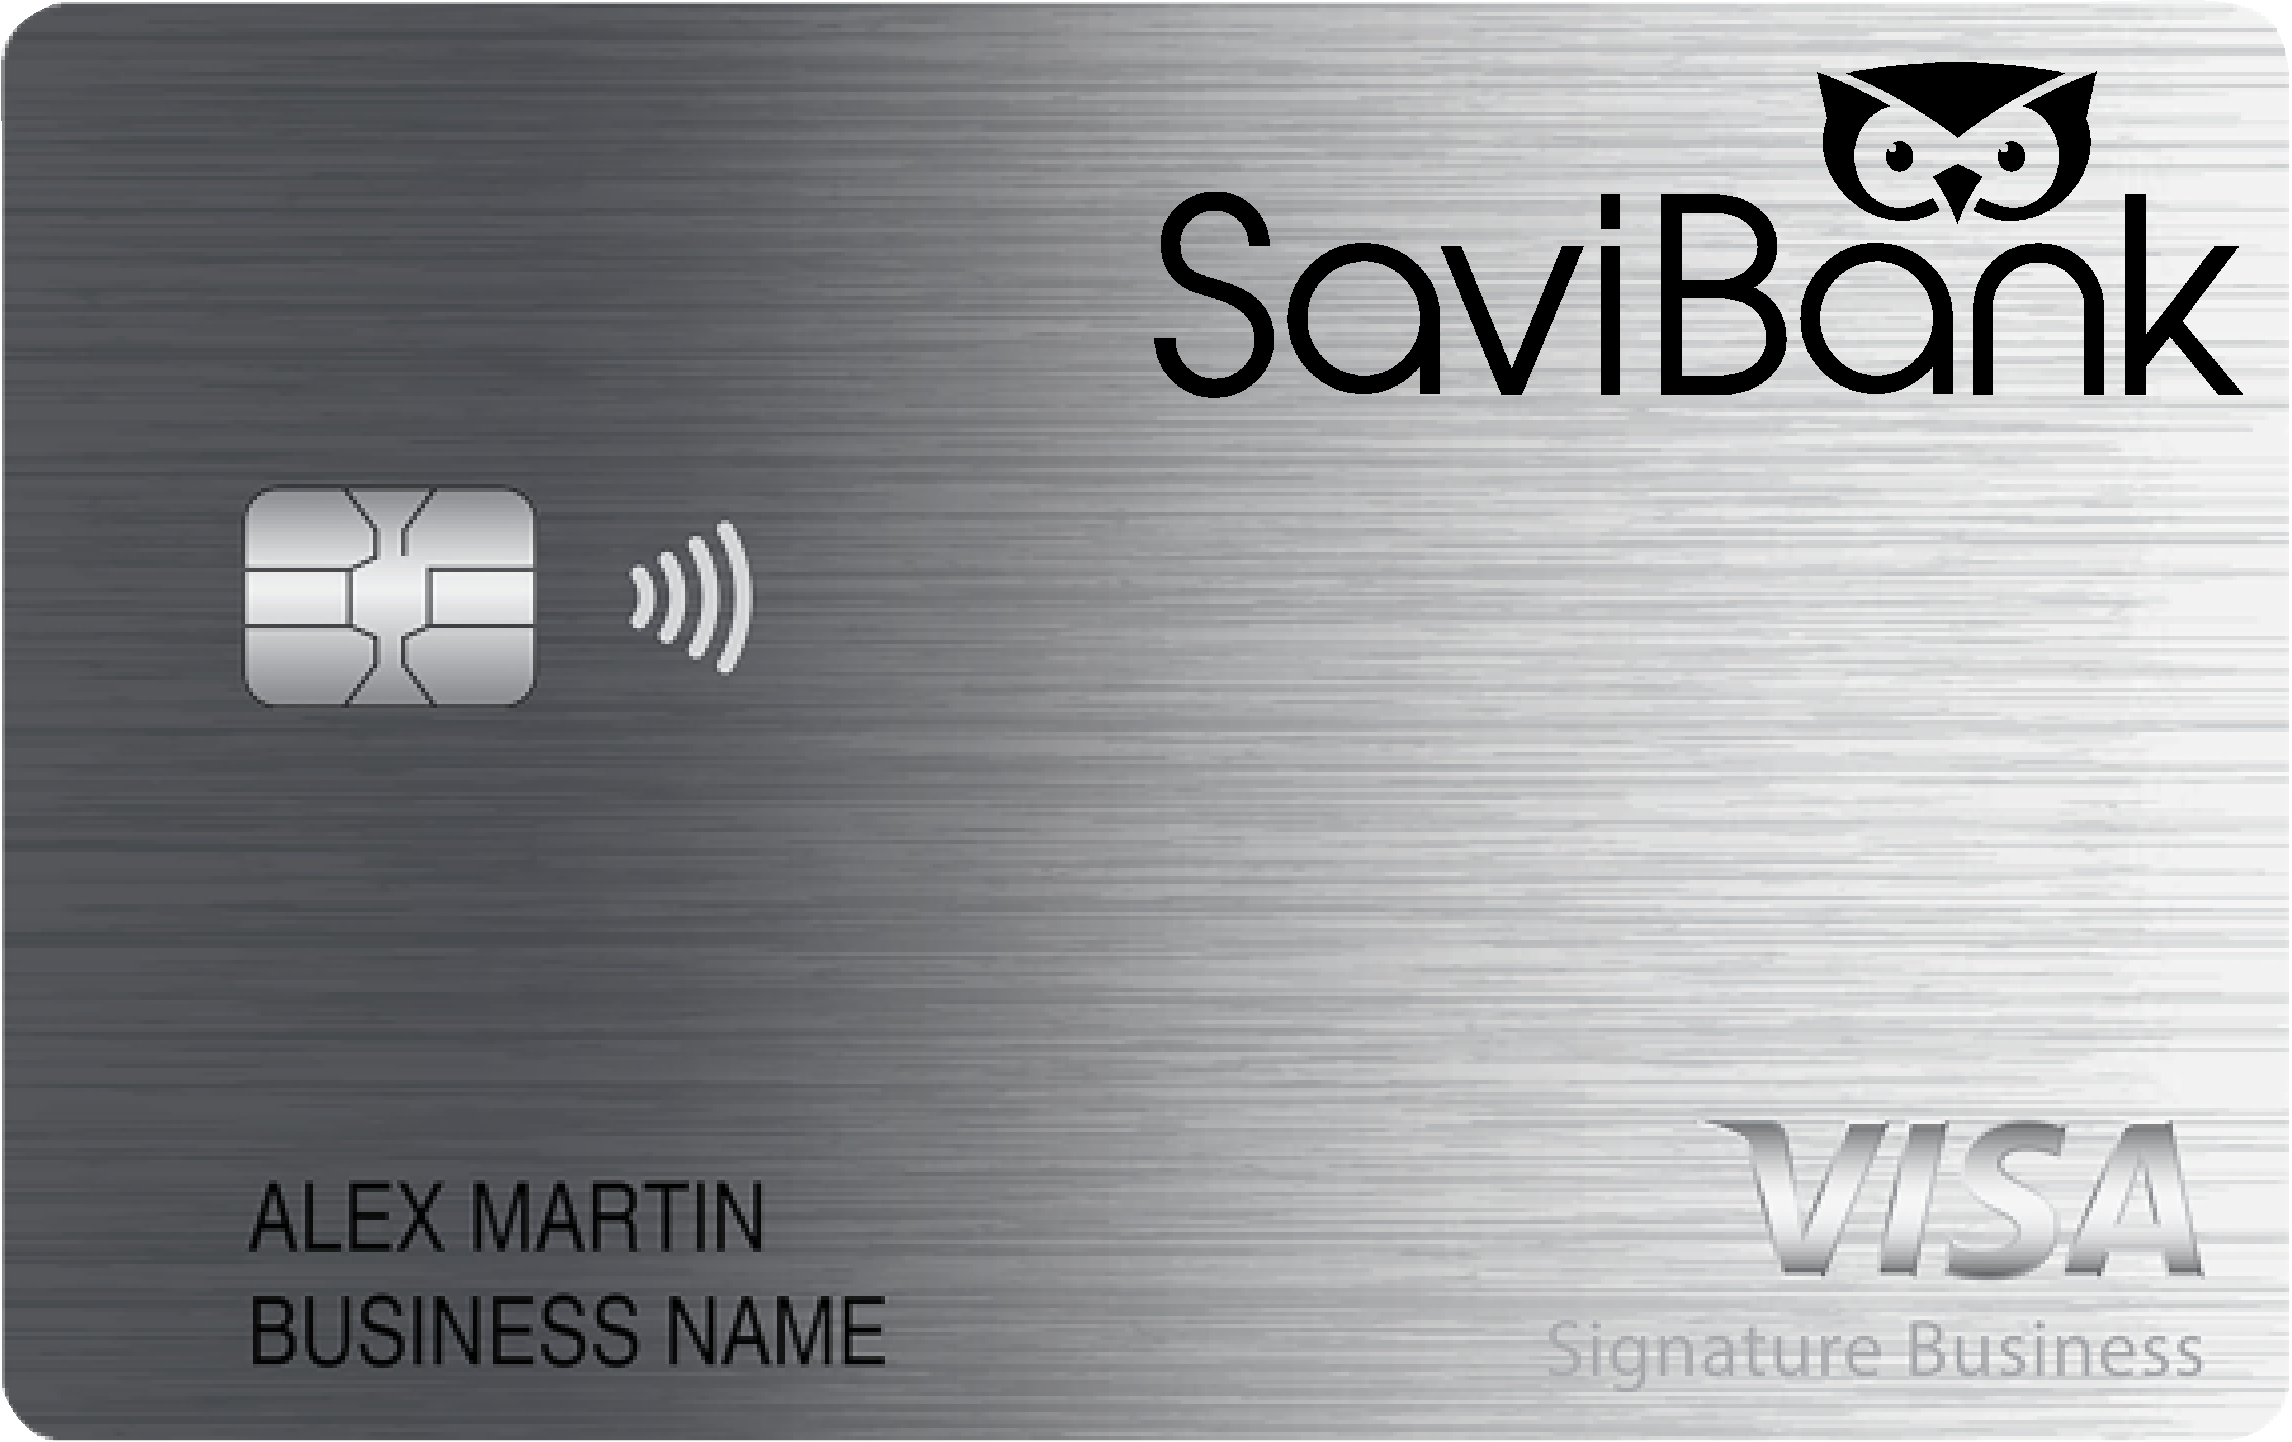 SaviBank Smart Business Rewards Card